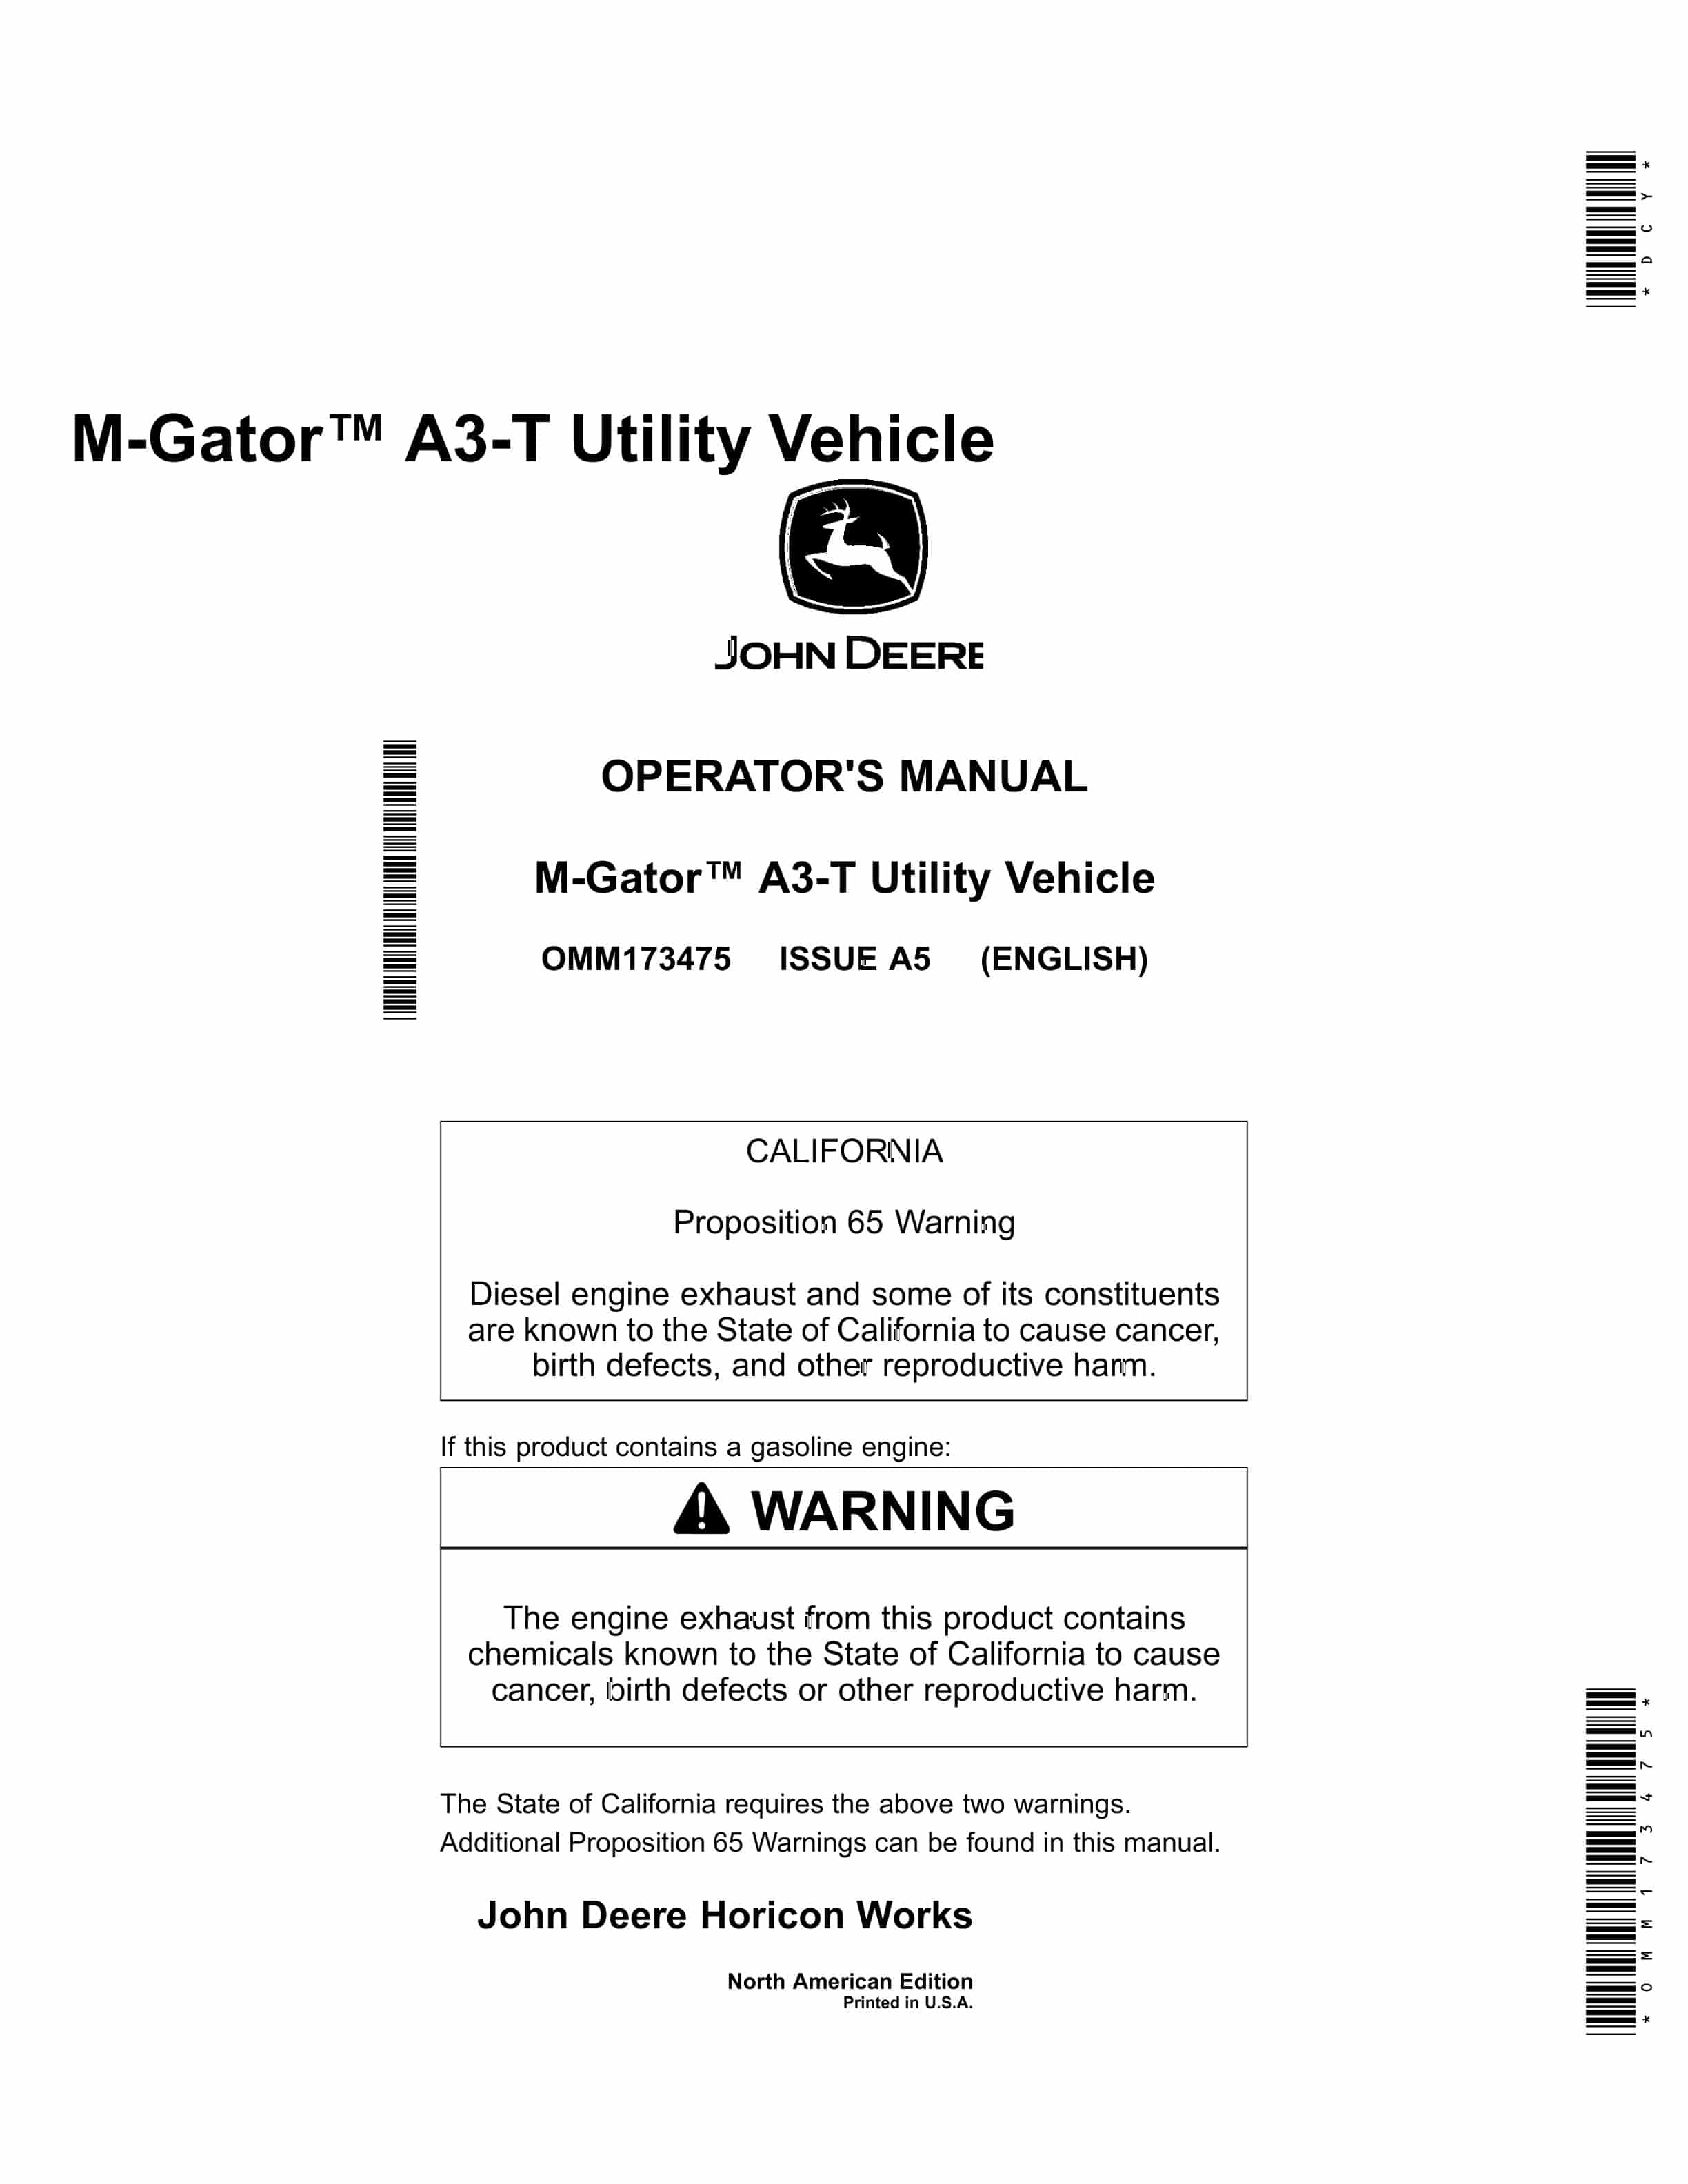 John Deere A3 T M Gator Utility Vehicles Operator Manual OMM173475 1